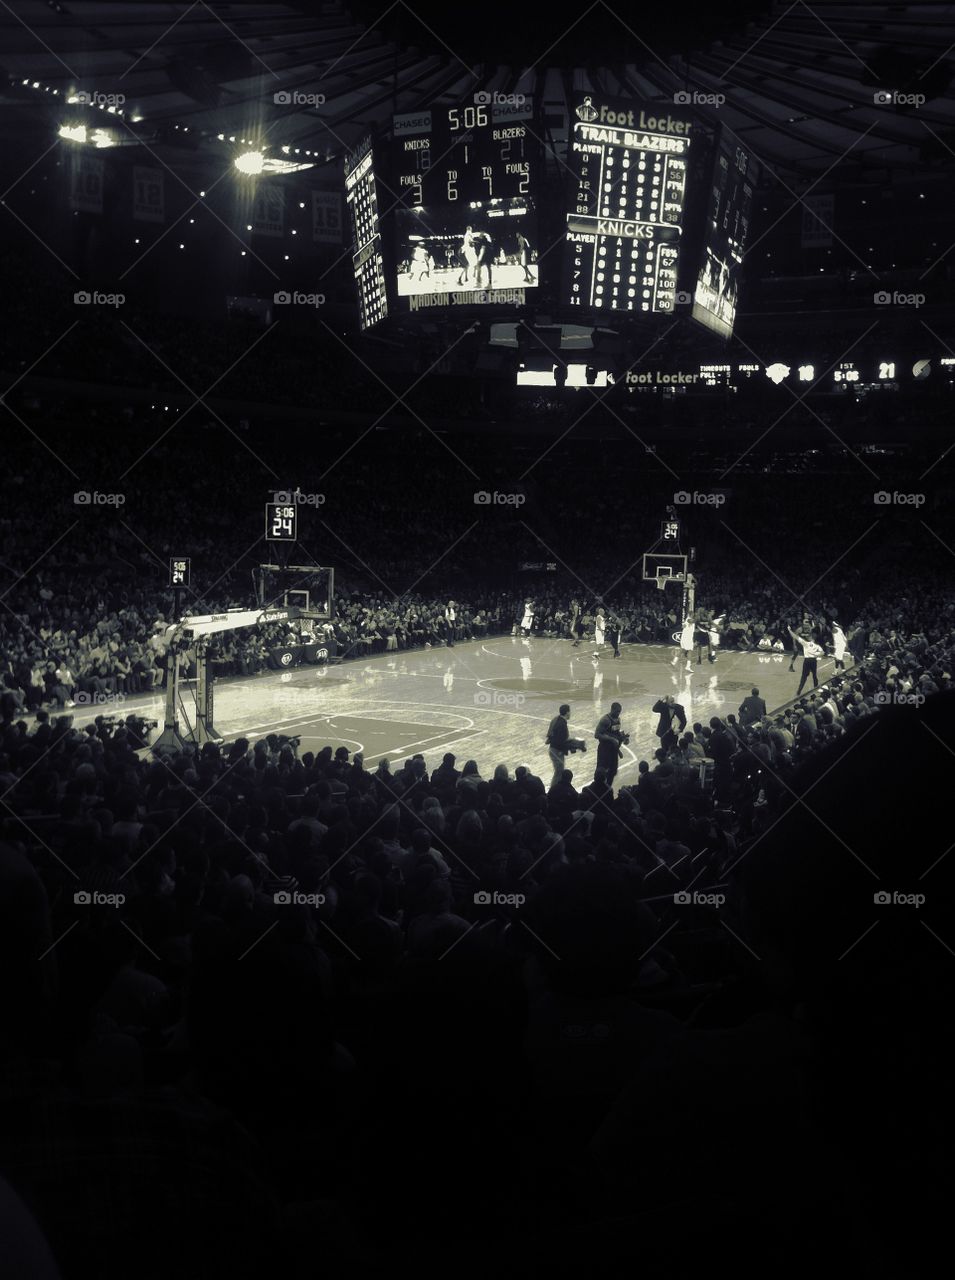 New York Knicks basketball game